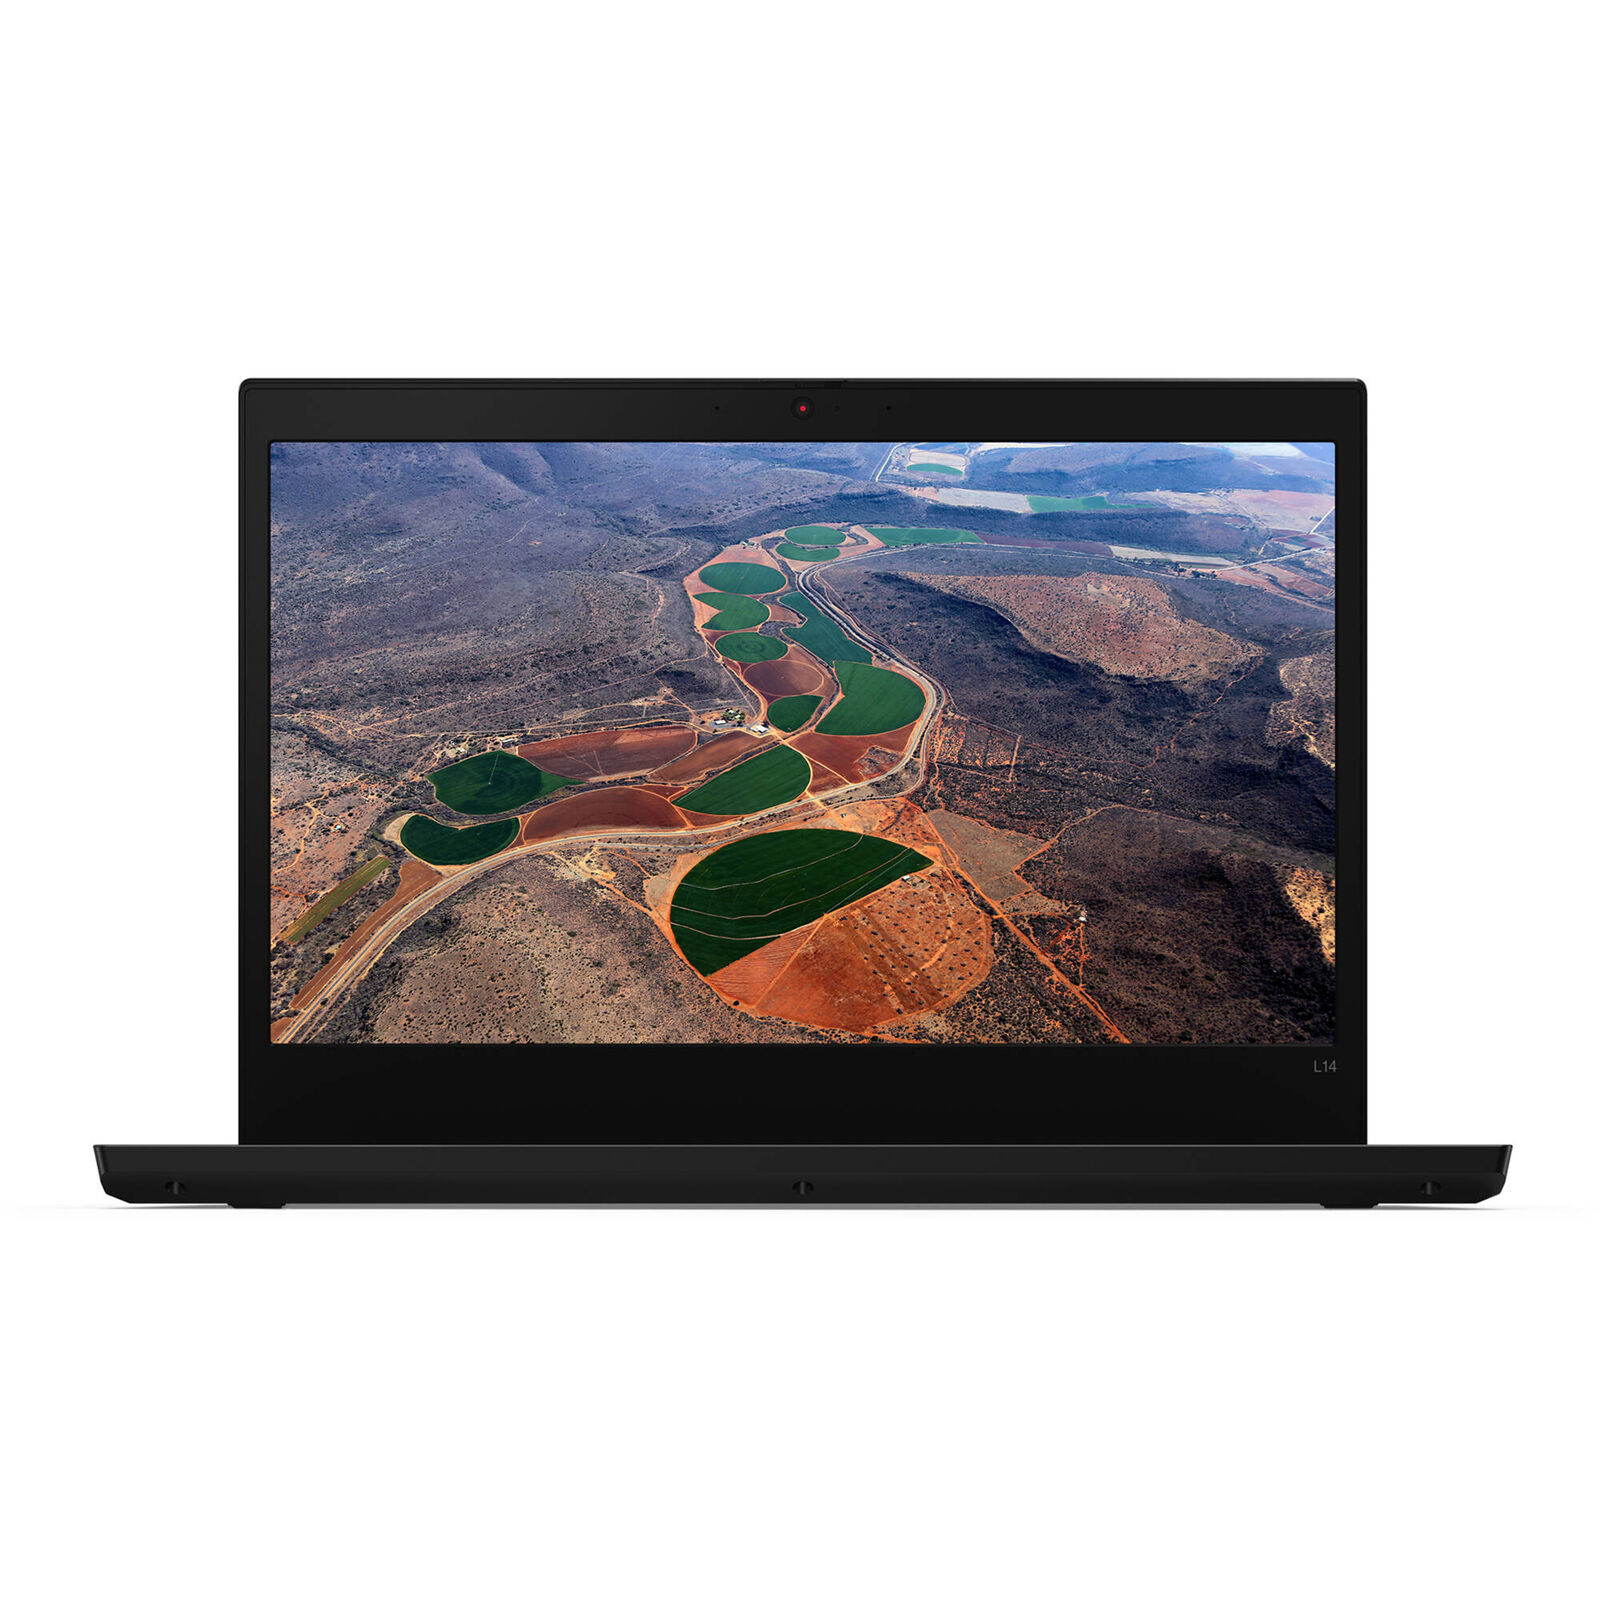 Lenovo ThinkPad L14 14” FHD Laptop AMD Ryzen 5 PRO 16GB RAM 256GB SSD Windows 10